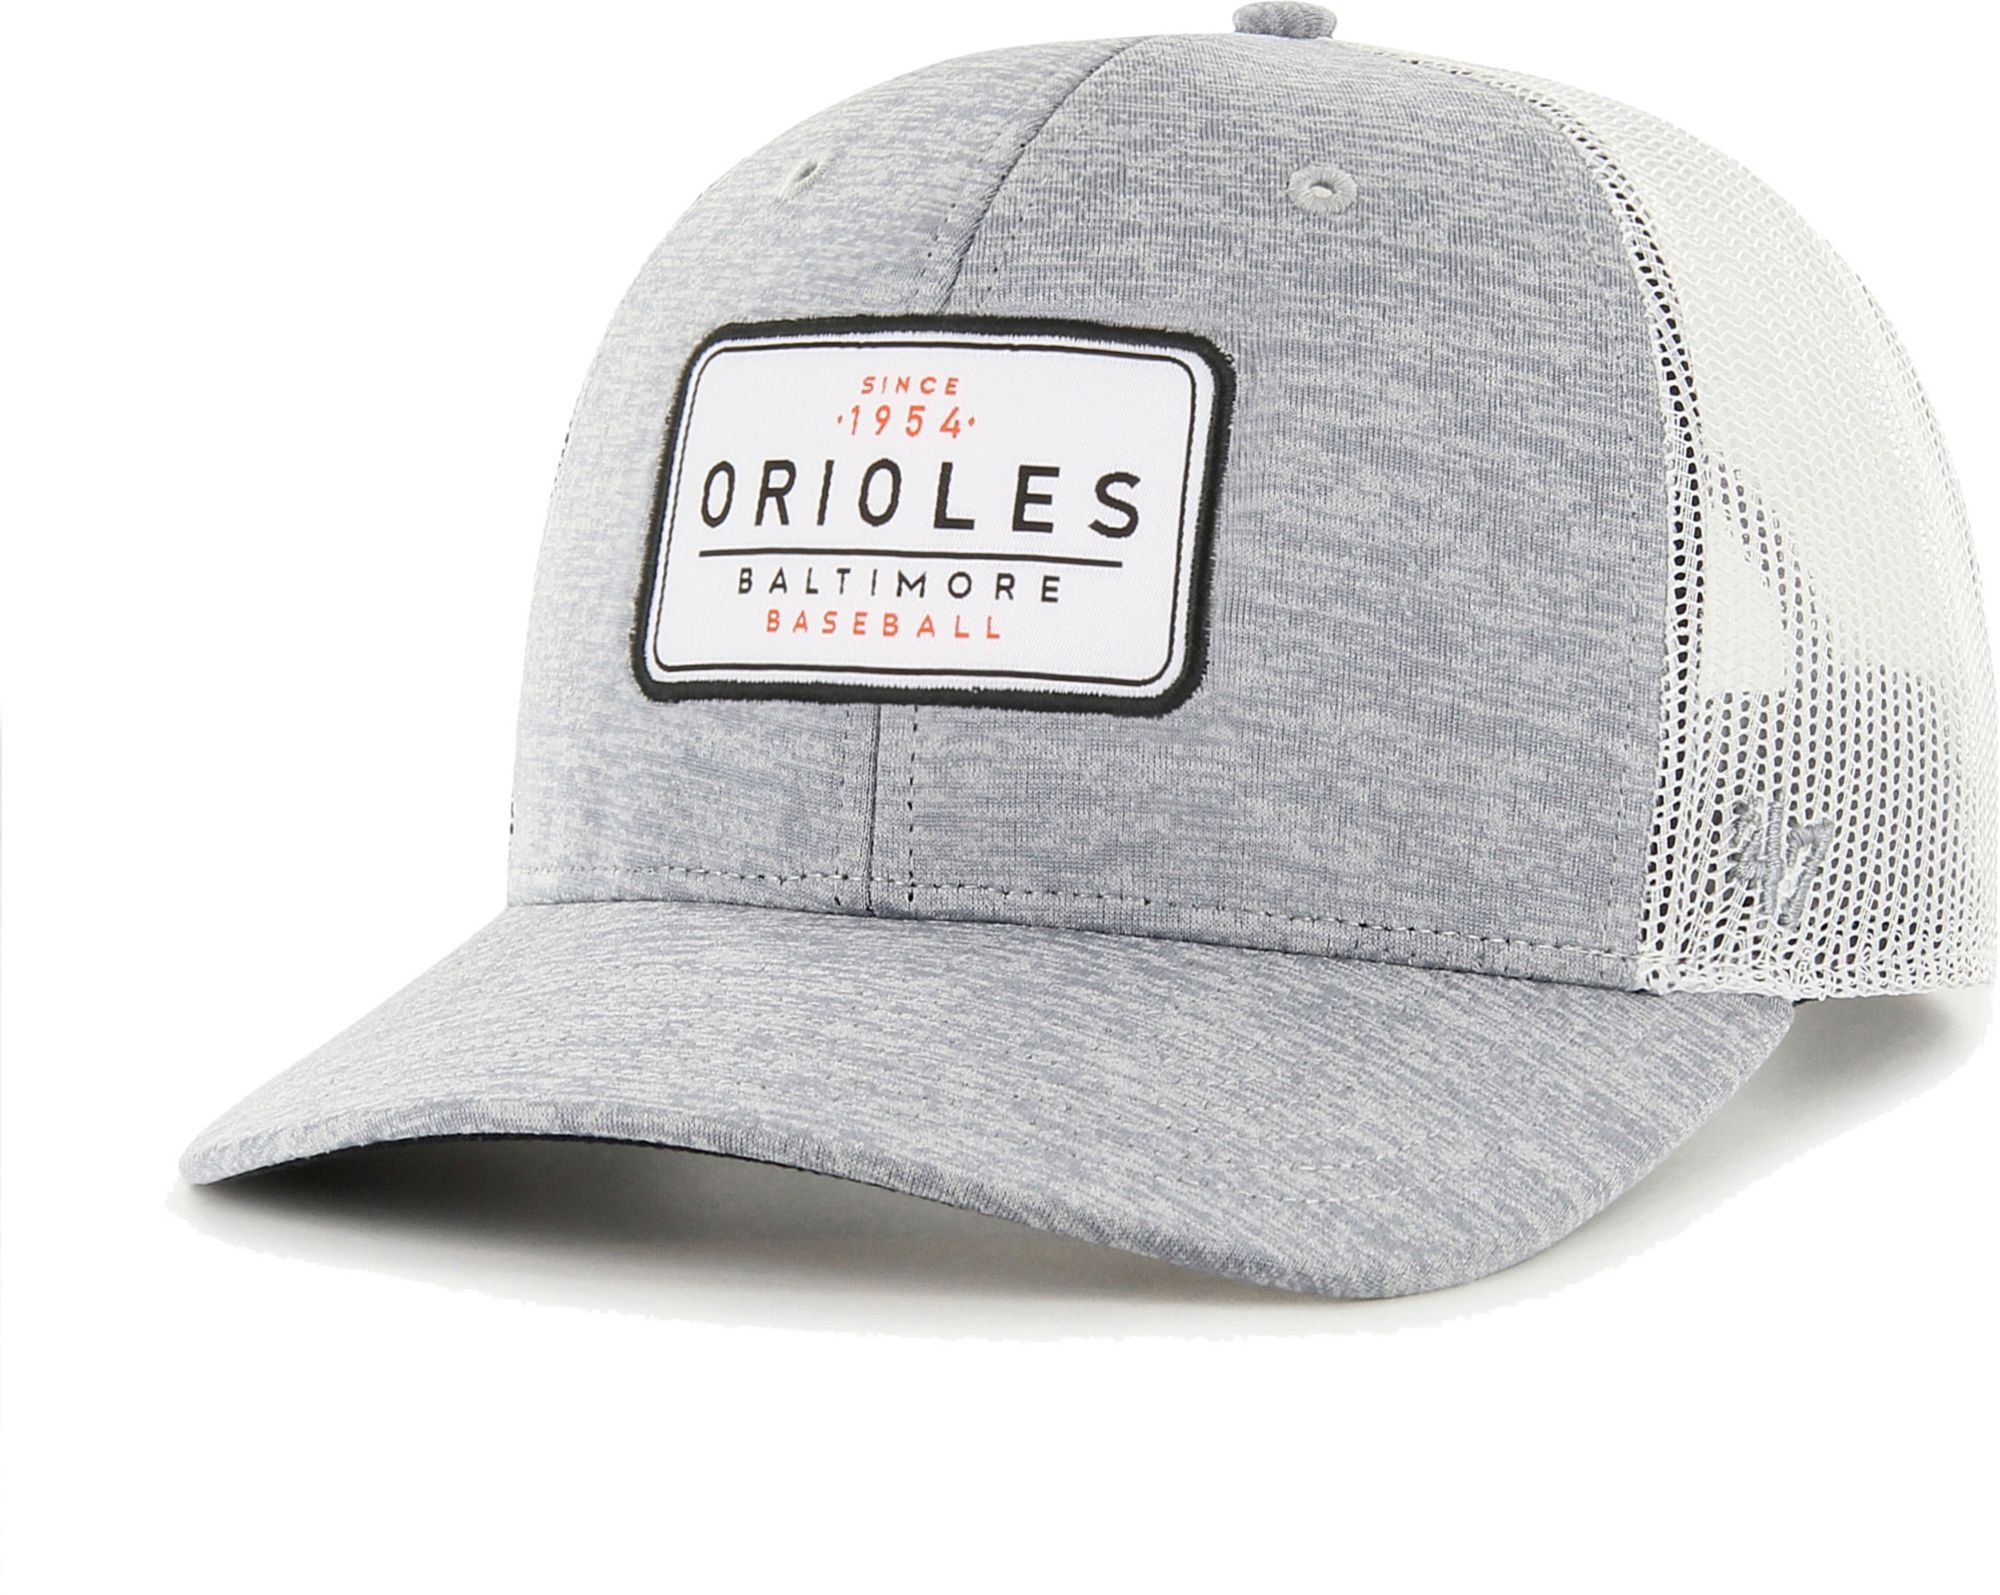 Baltimore Orioles BALTIMORE SCRIPT Black-White Fitted Hat